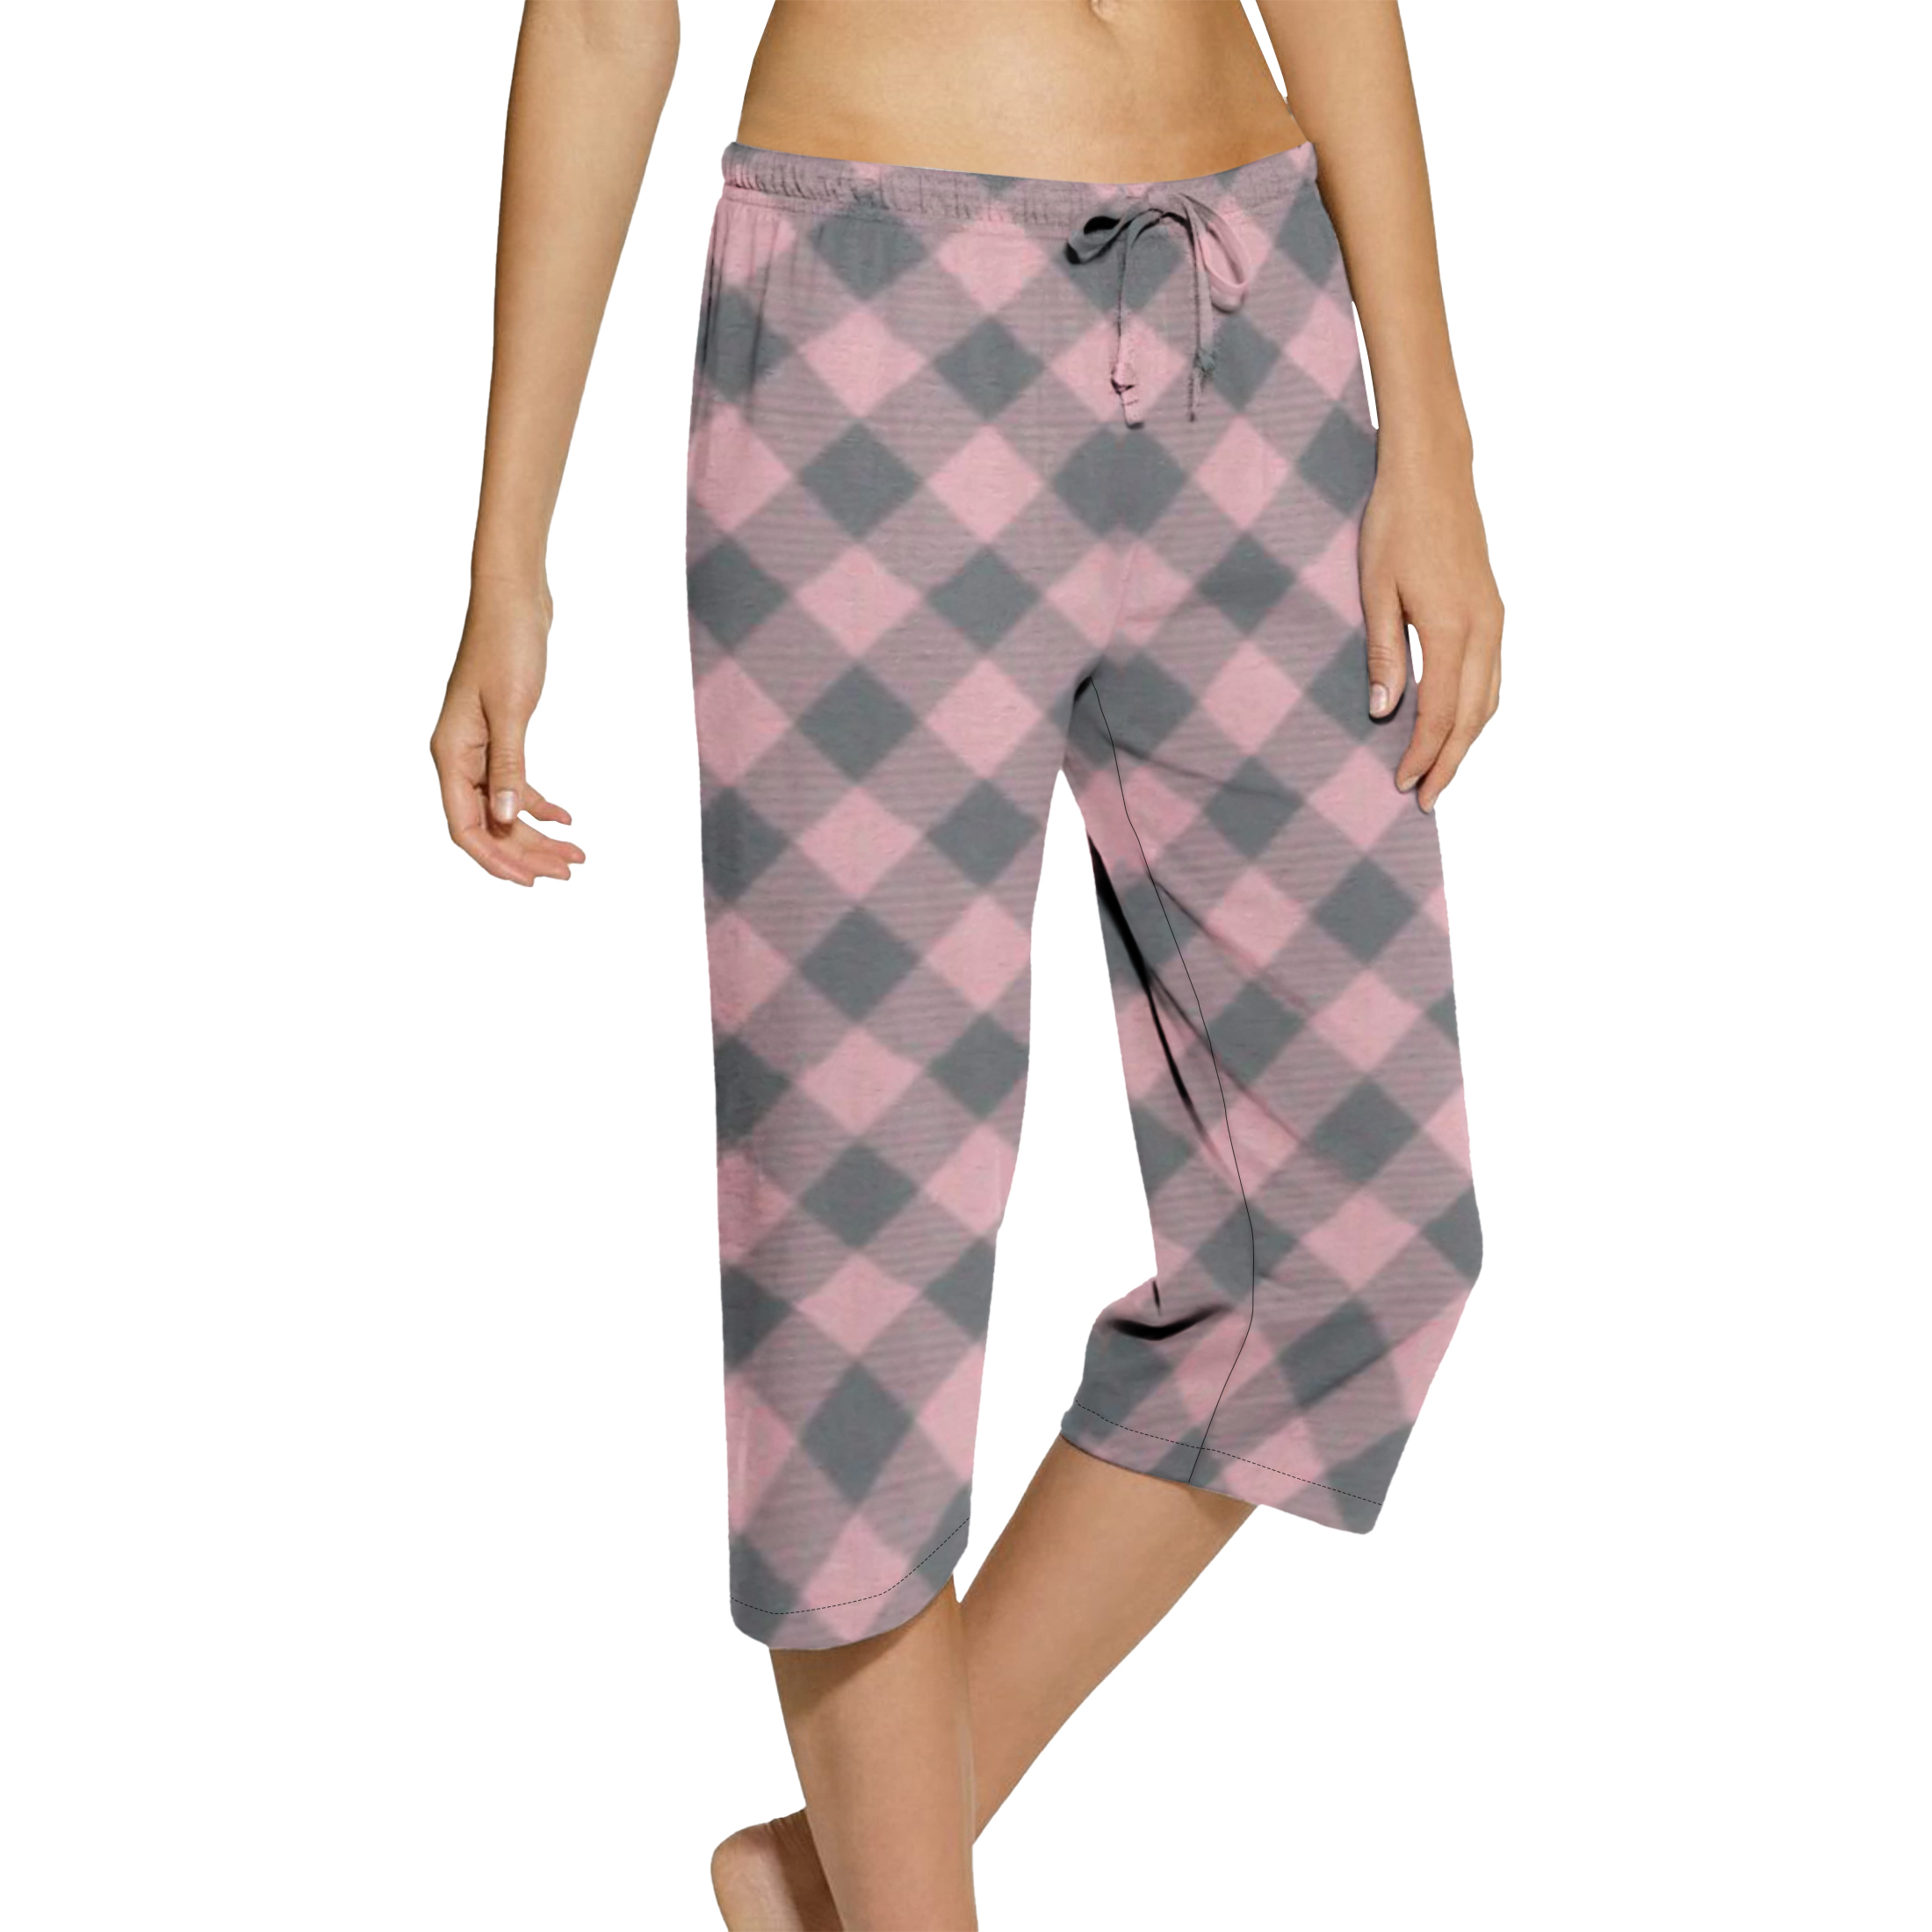 3-Pack: Ladies Printed Pajama Bottoms Capri Pants Sleepwear With Drawstring - Large